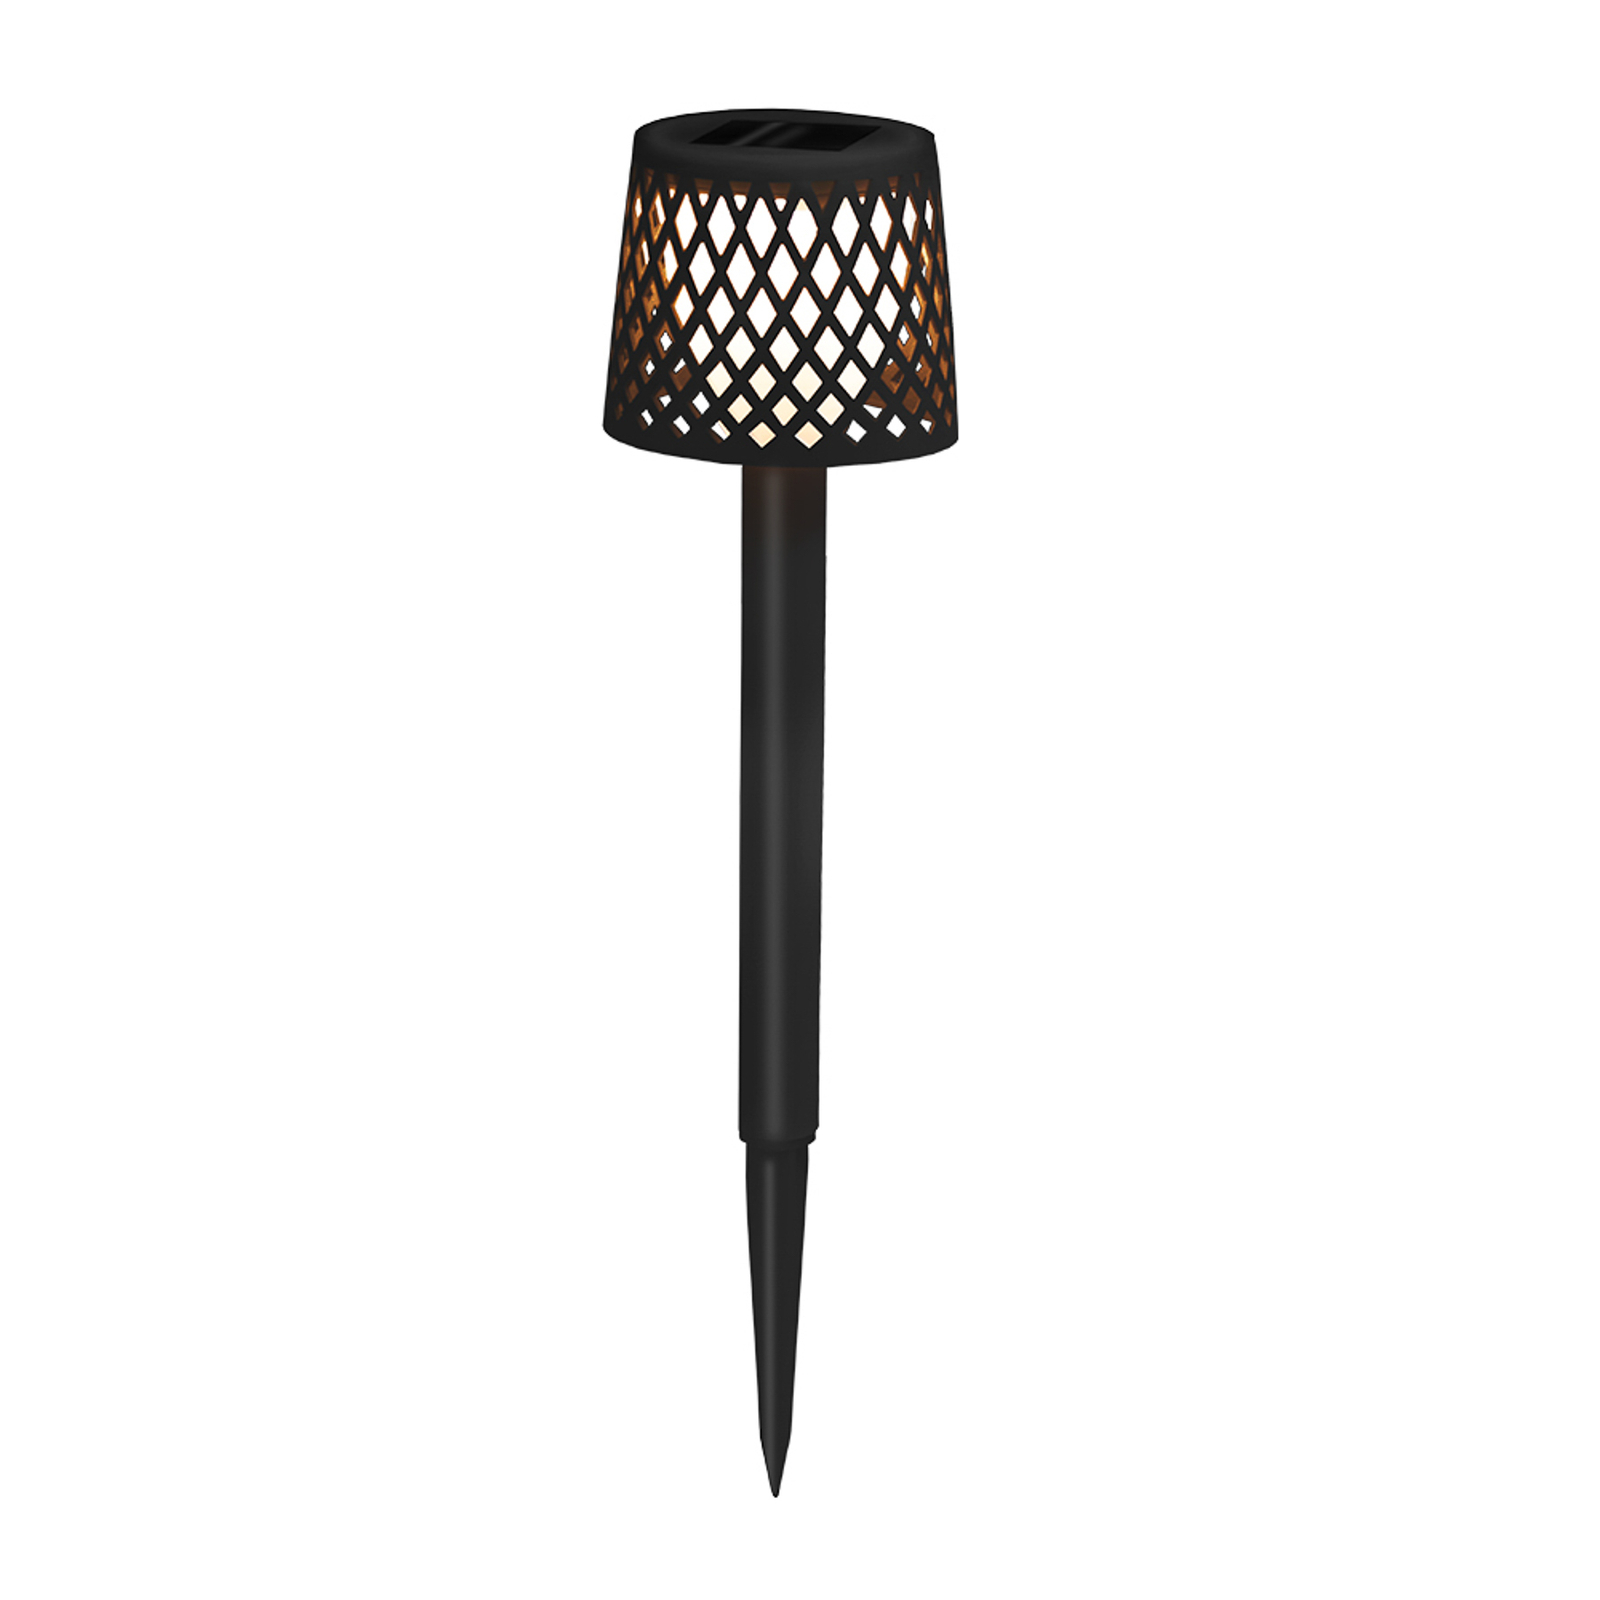 Newgarden Gretita LED solar light, black